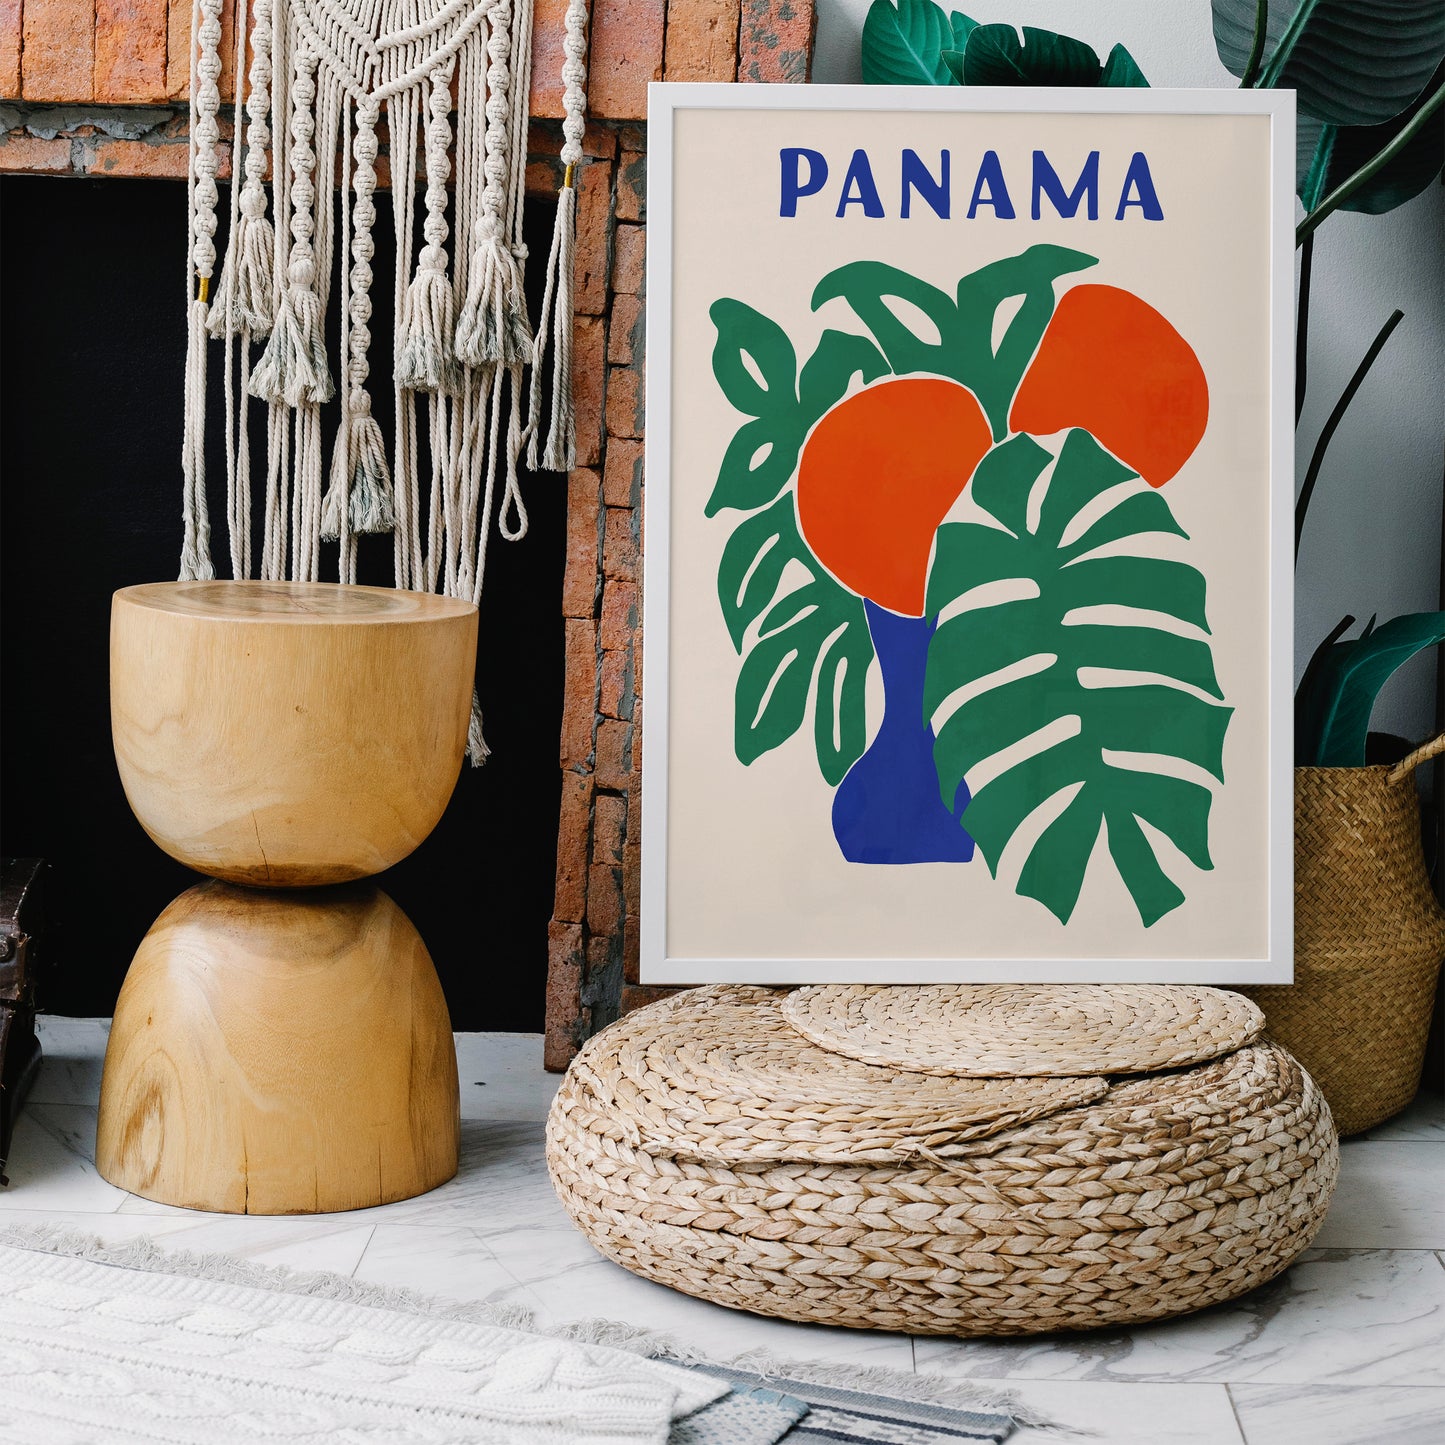 Retro Panama Travel Poster